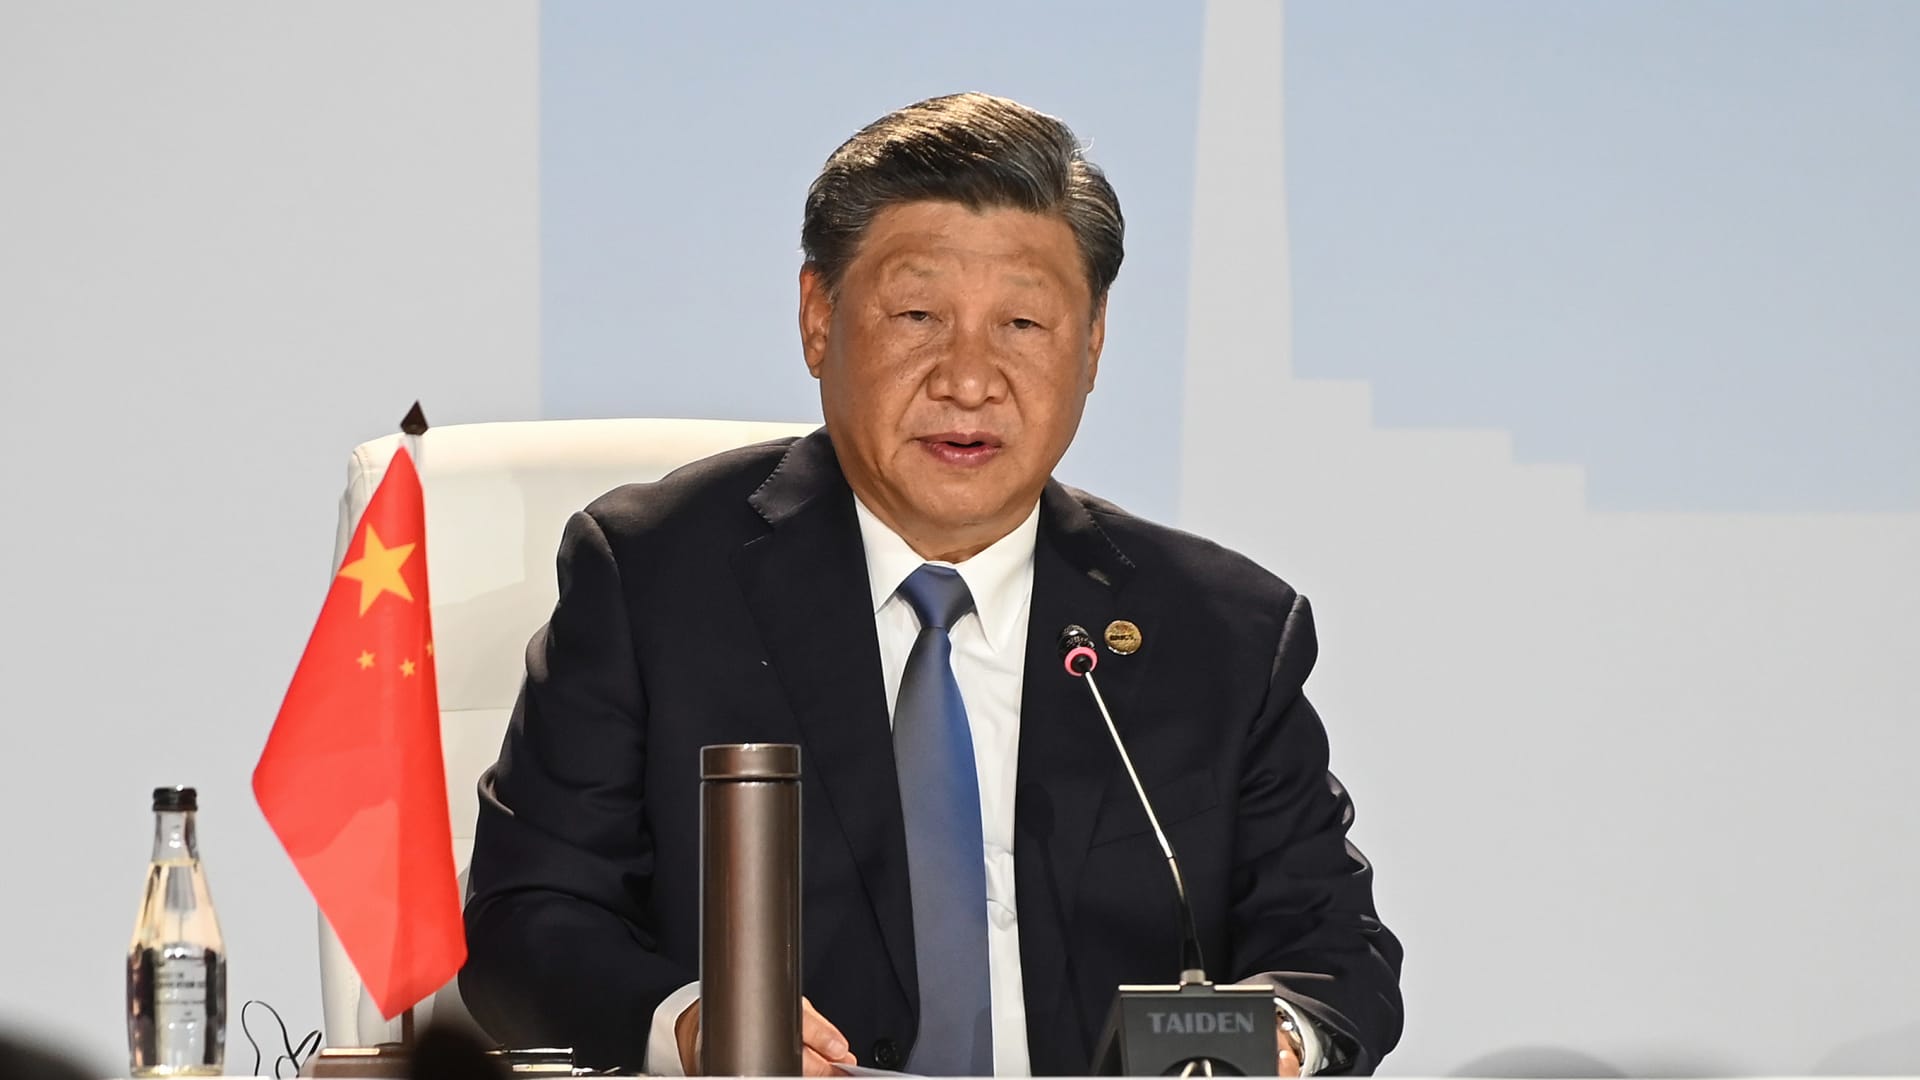 Xi to skip G20 summit in India, China to send Li instead